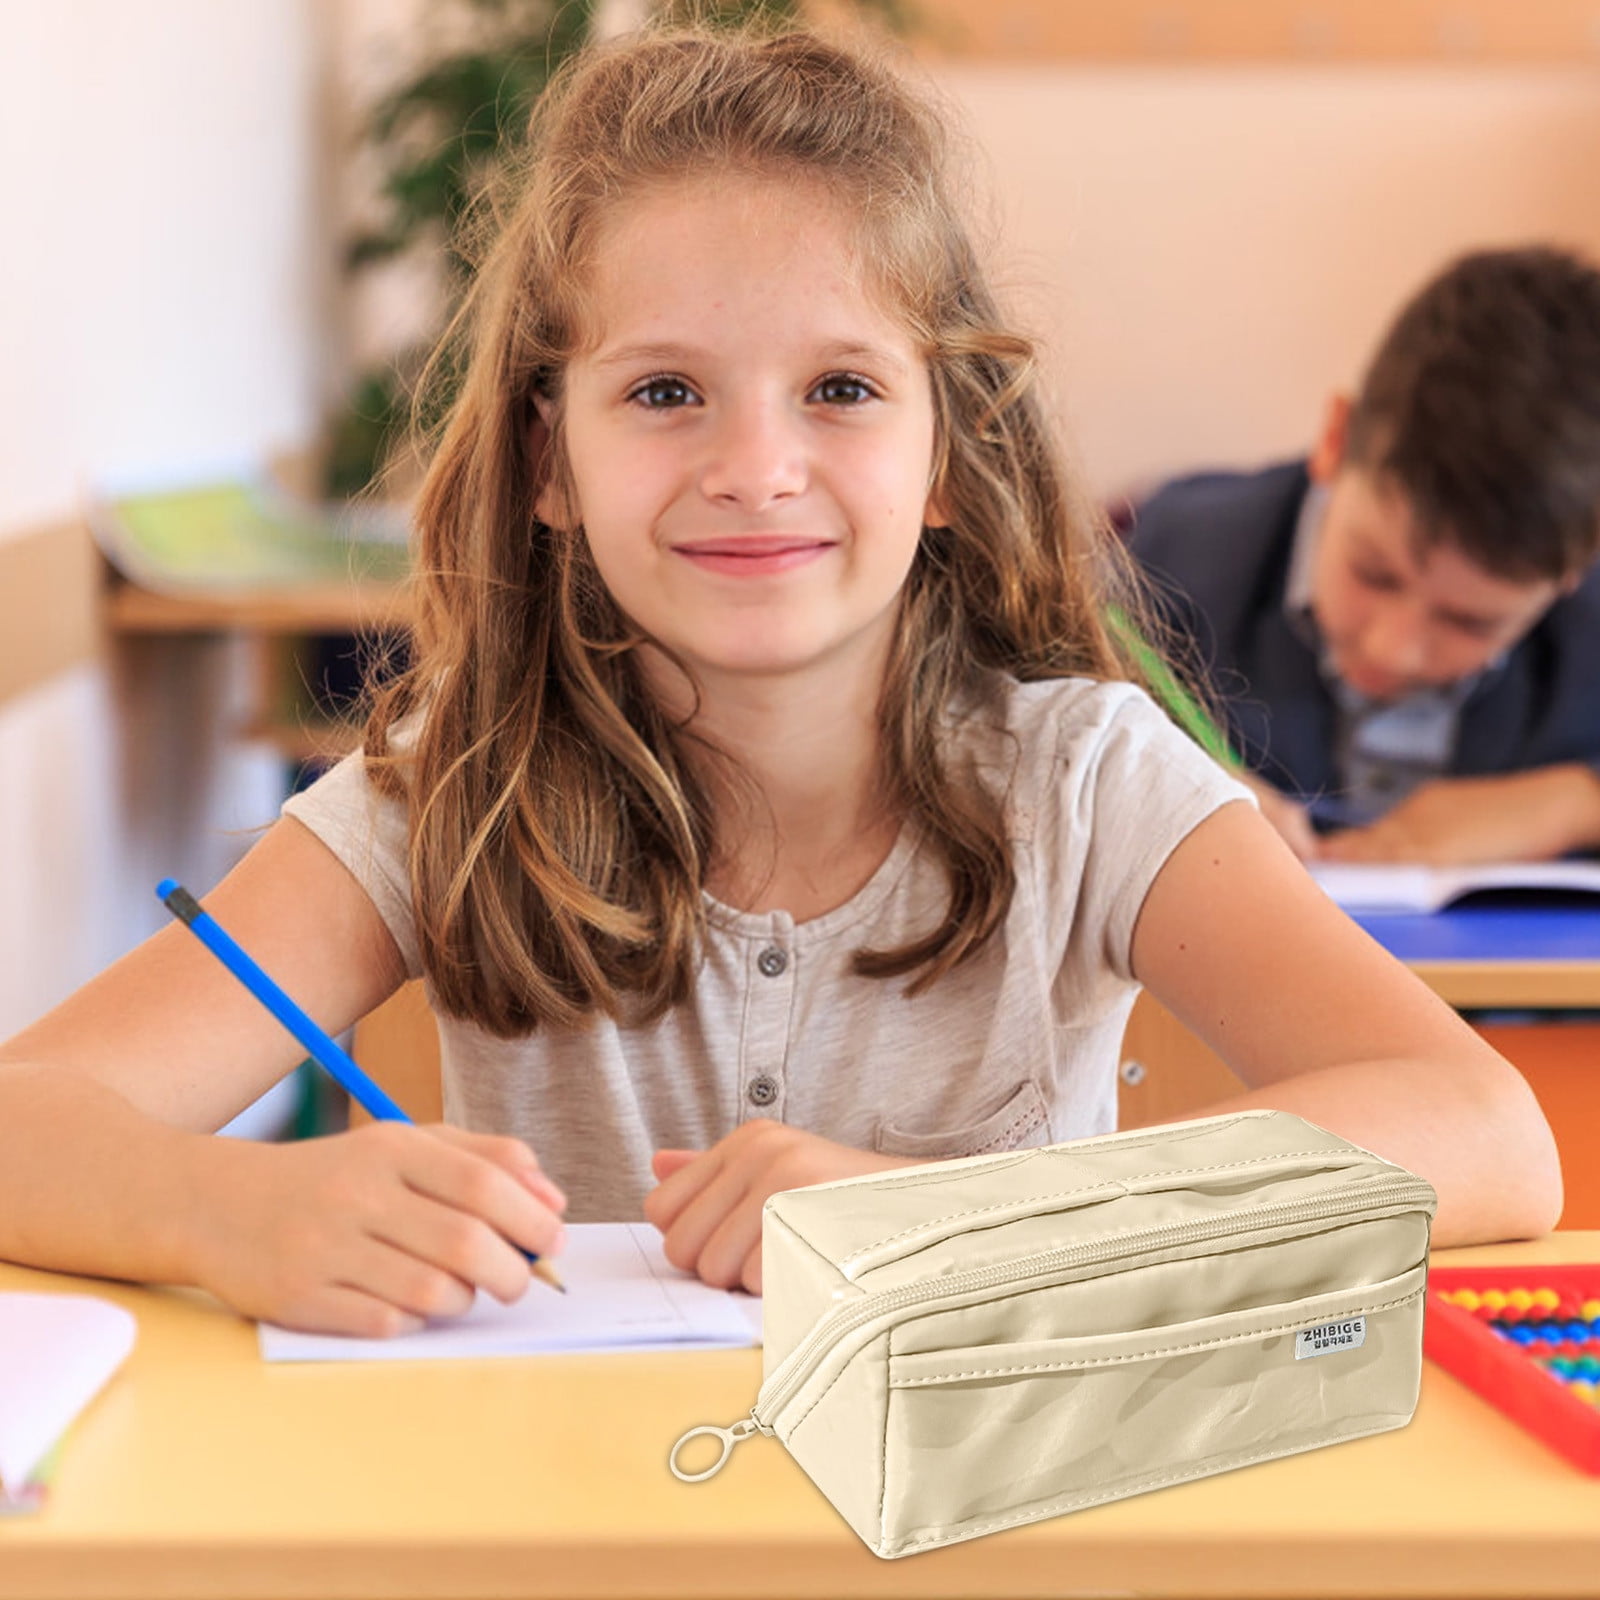 BKFYDLS School Supplies Clearance Pencil Case Pencil Pouch Large Capacity  Pencil Case, Durable Pencil Case, Pencil Case Storage Box For Girls Or Boys